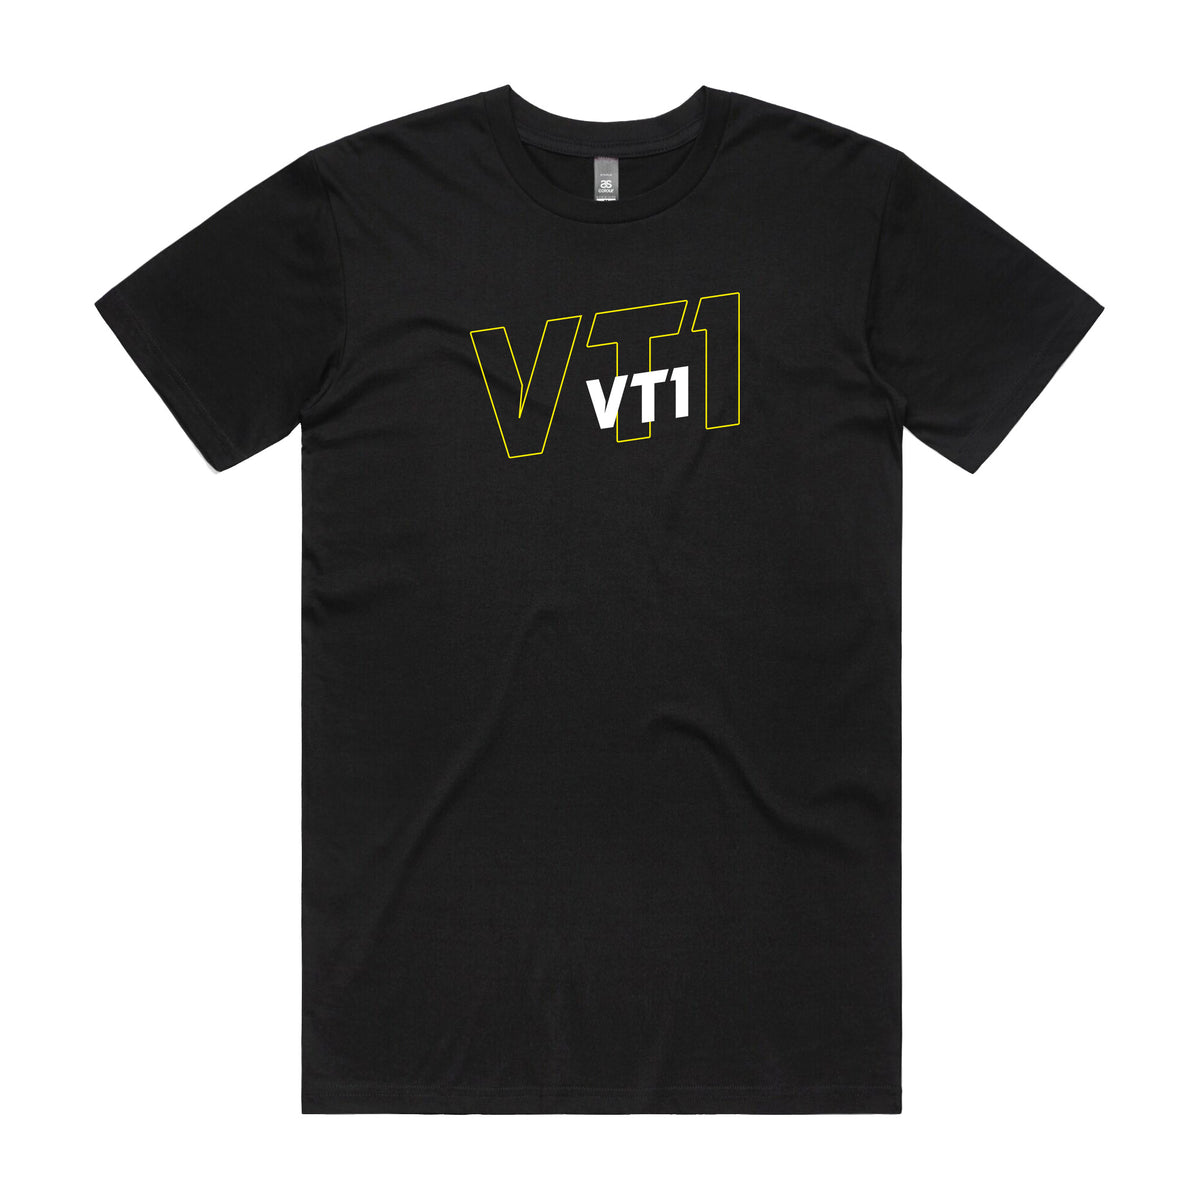 VT1 Sports T-Shirt - Adults